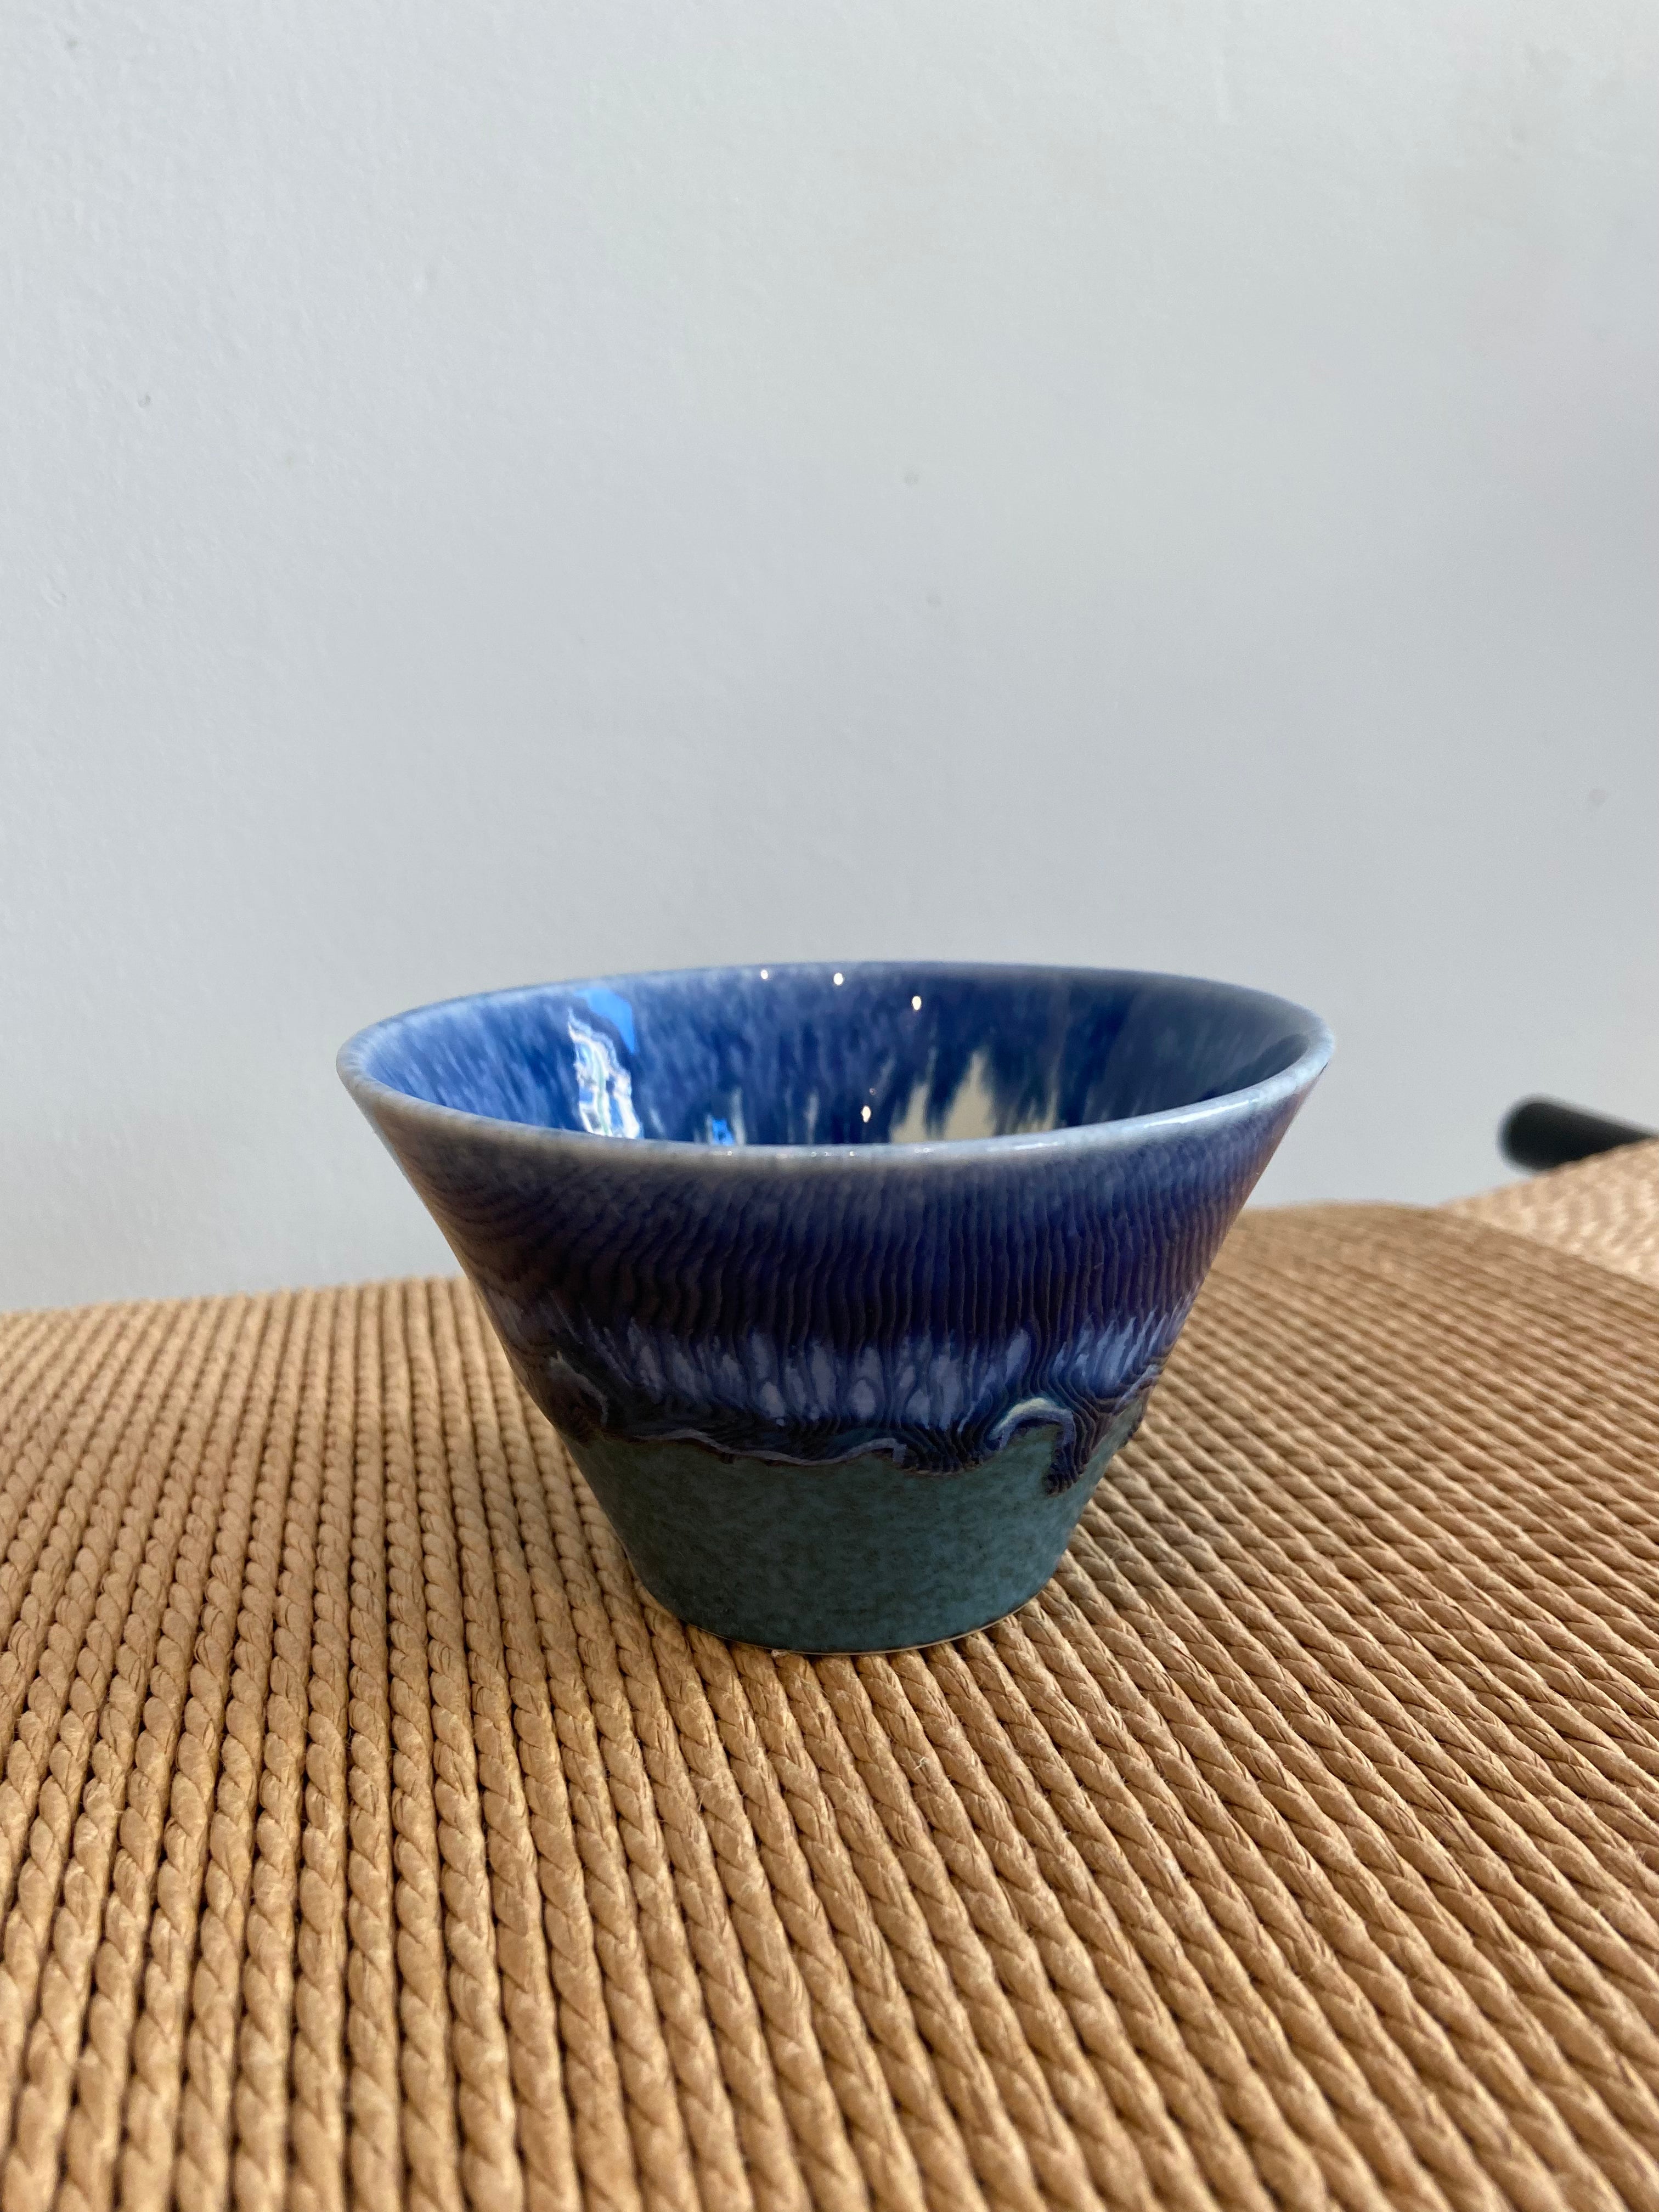 Handmade bowl with dark blue glaze